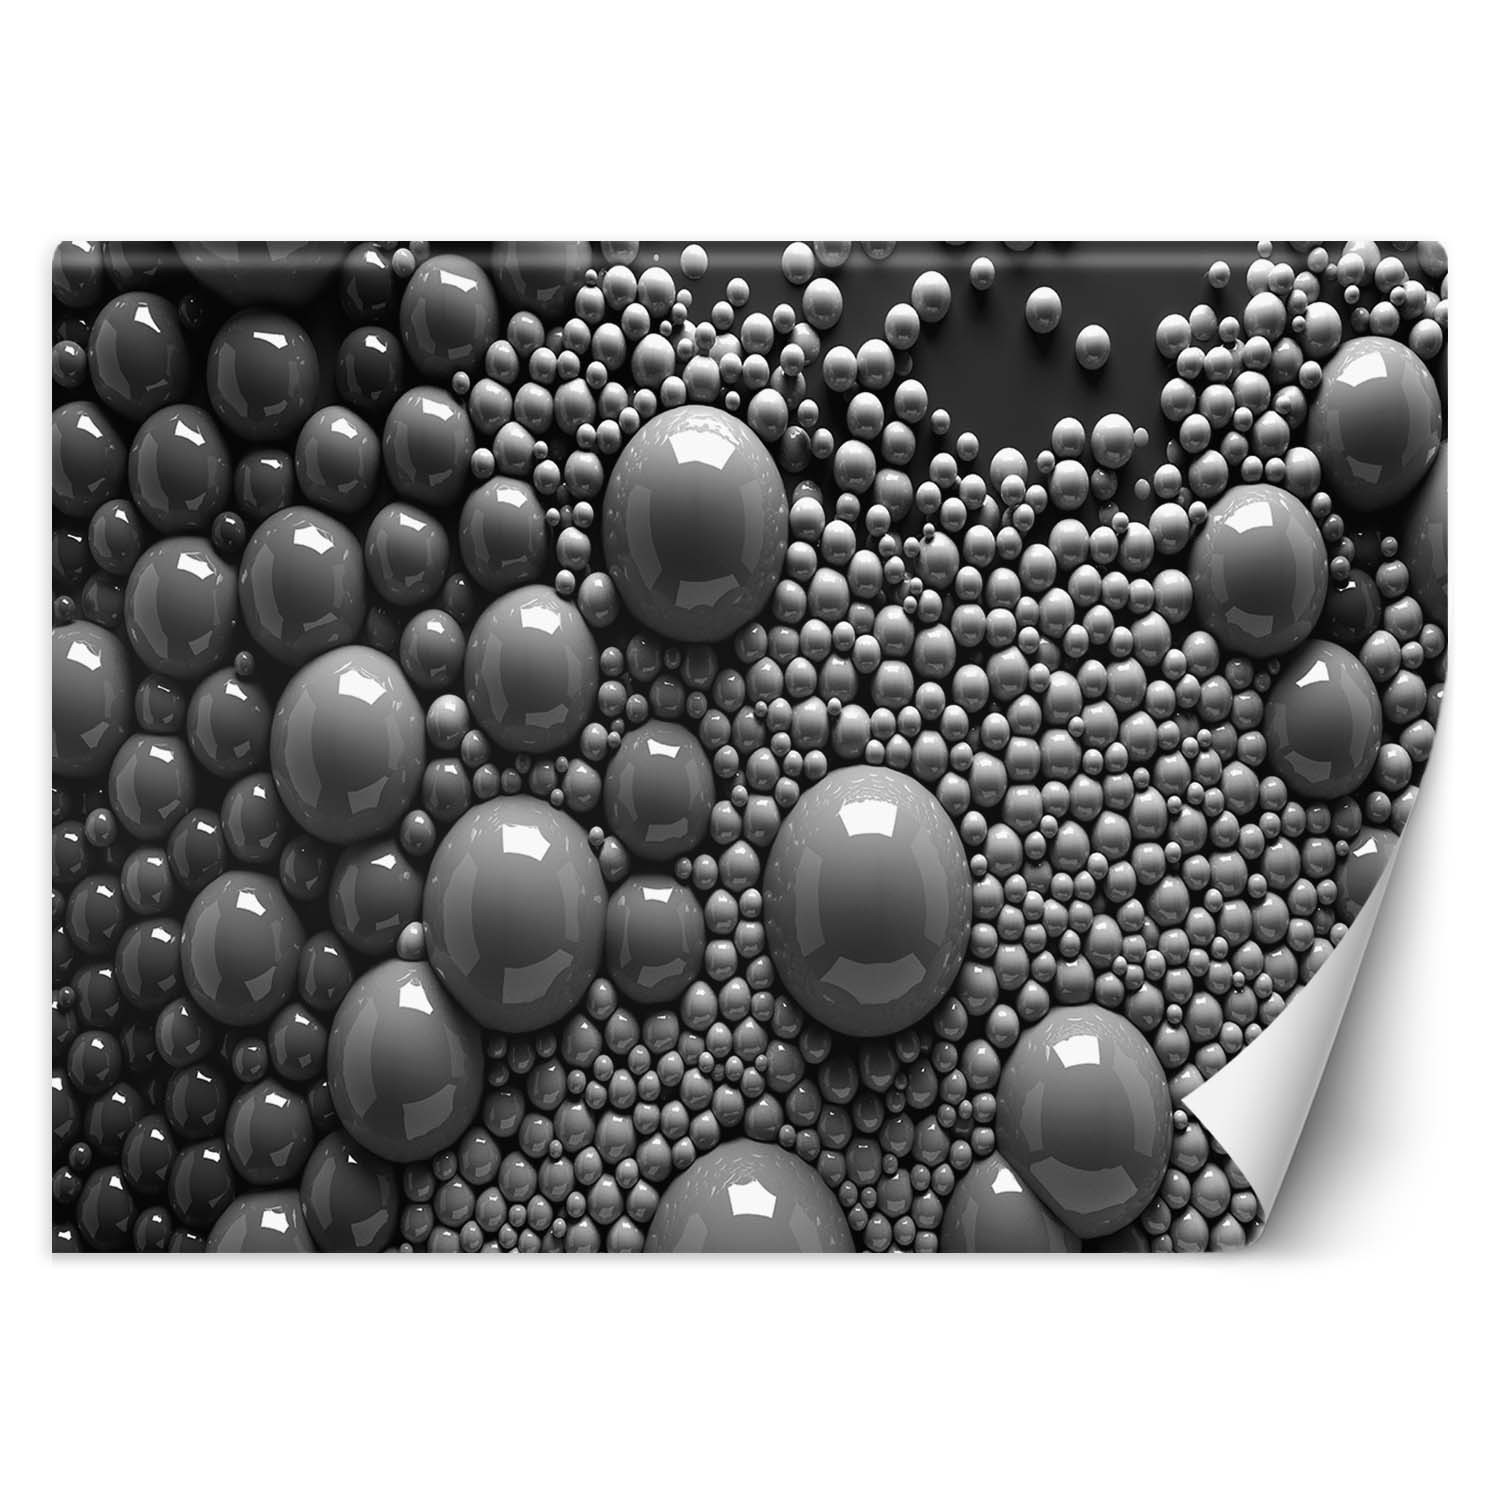 Trend24 – Behang – Abstracte 3D-Bollen – Vliesbehang – Fotobehang 3D – Behang Woonkamer – 350x245x2 cm – Incl. behanglijm